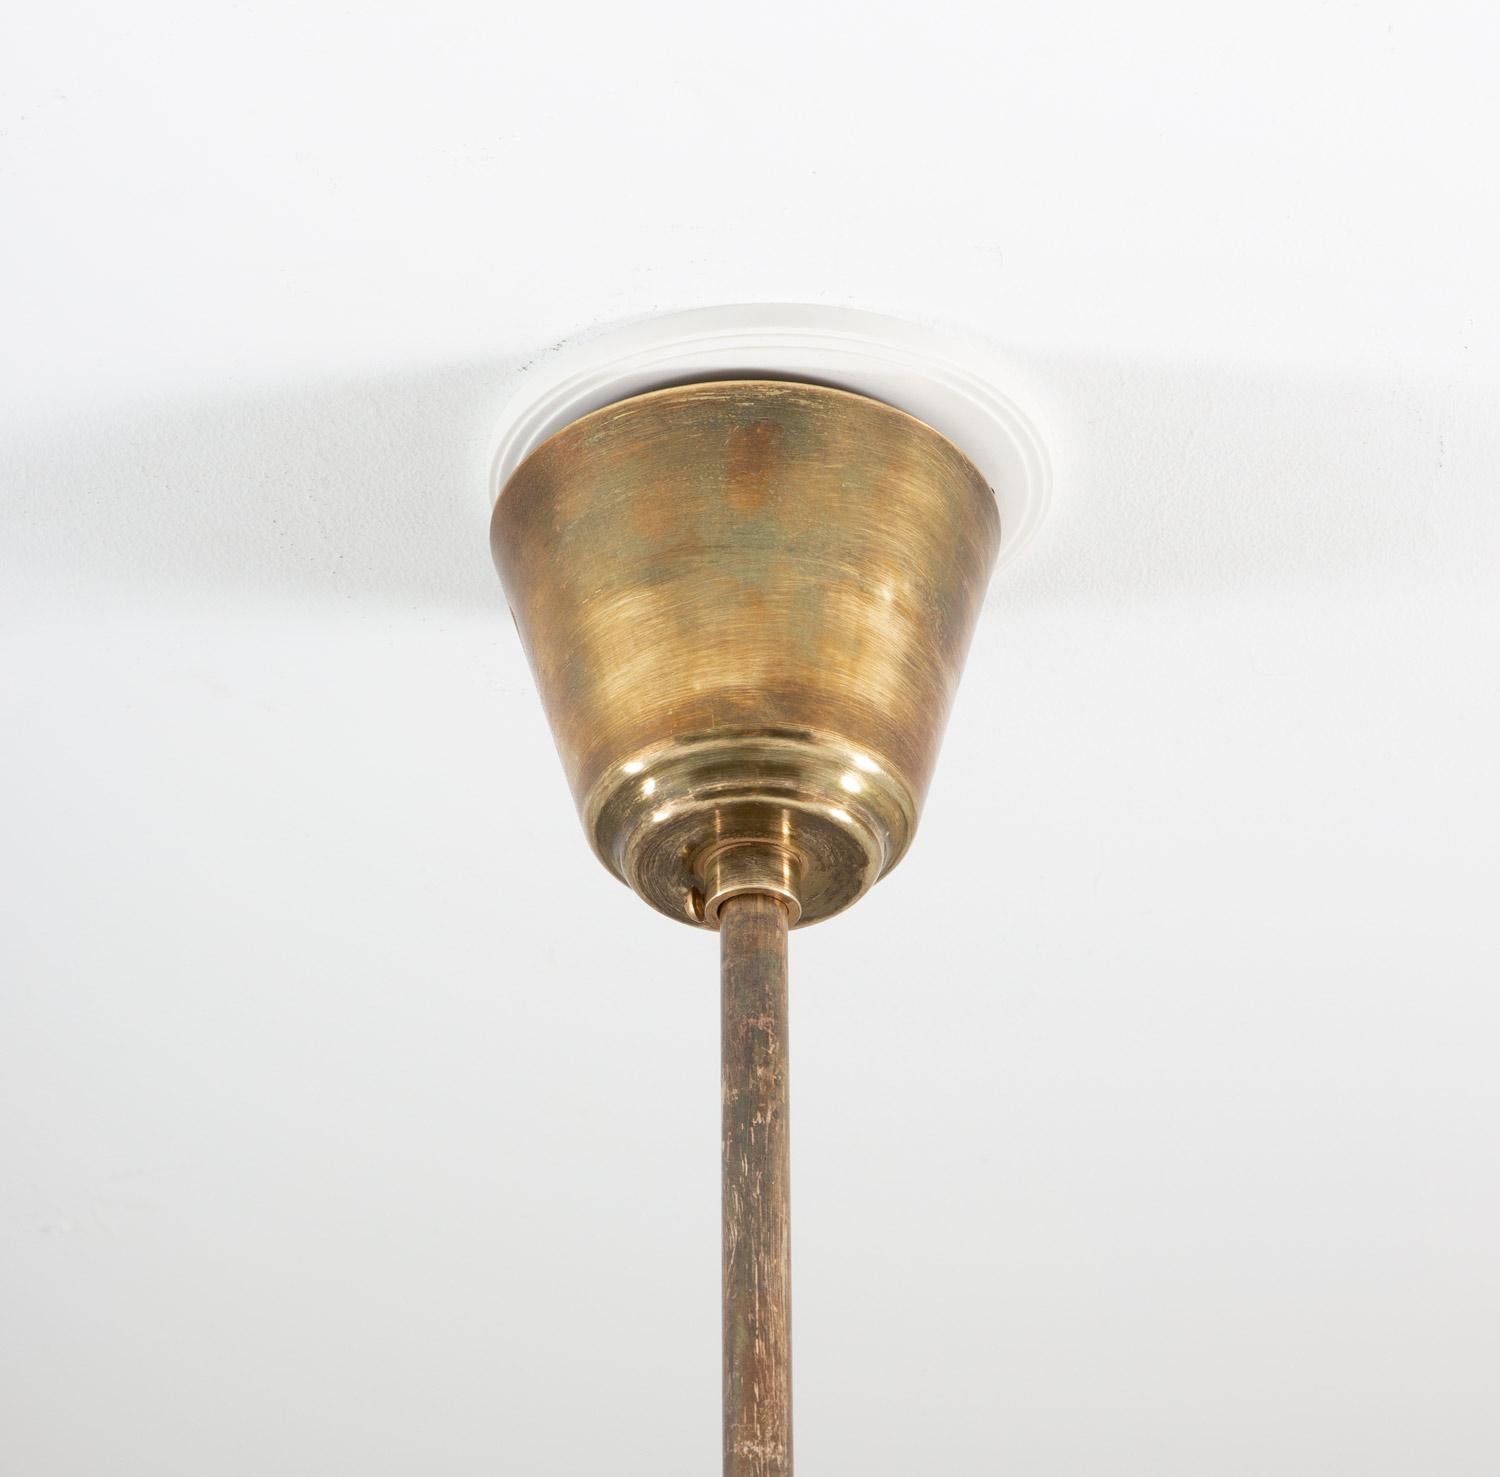 Scandinavian Pendant in Brass and Glass by Böhlmarks, Swedish Modern Era, 1940s For Sale 3